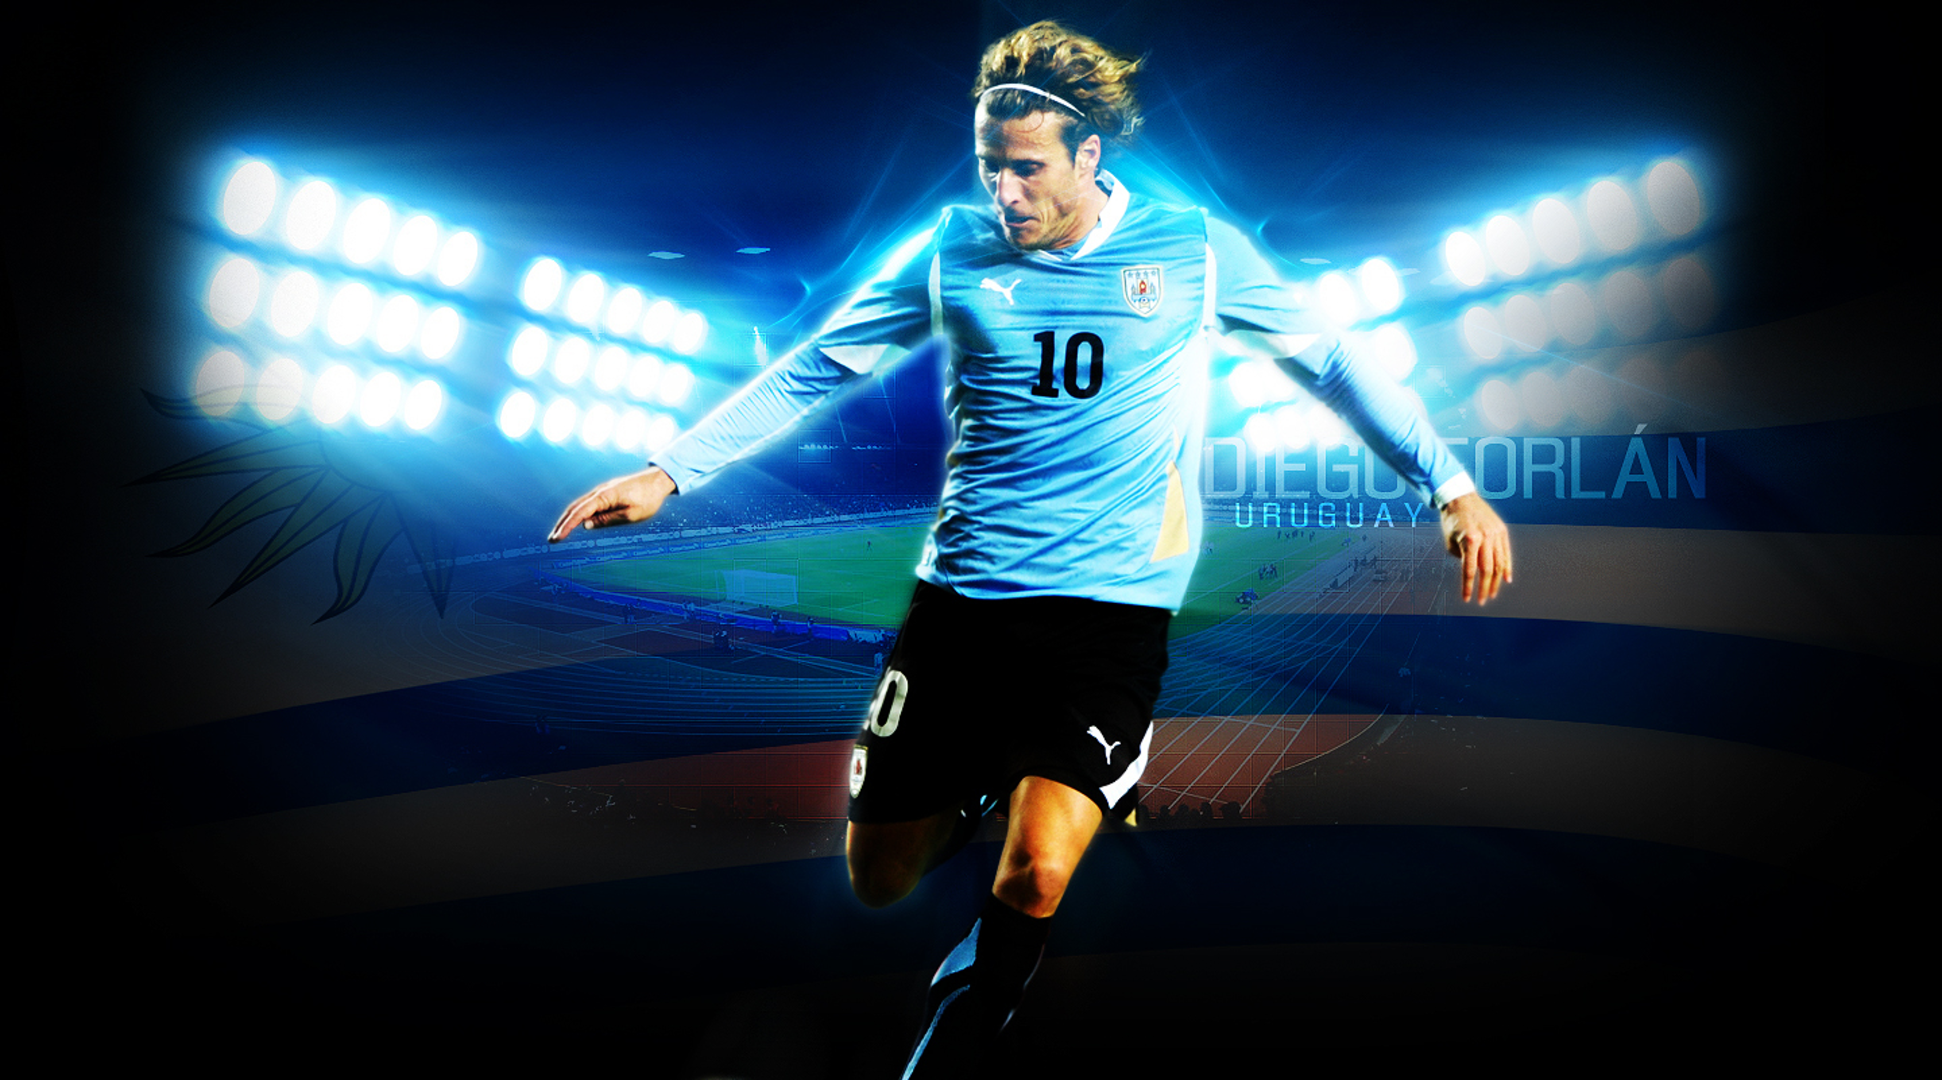 Uruguay National Football Team Wallpapers